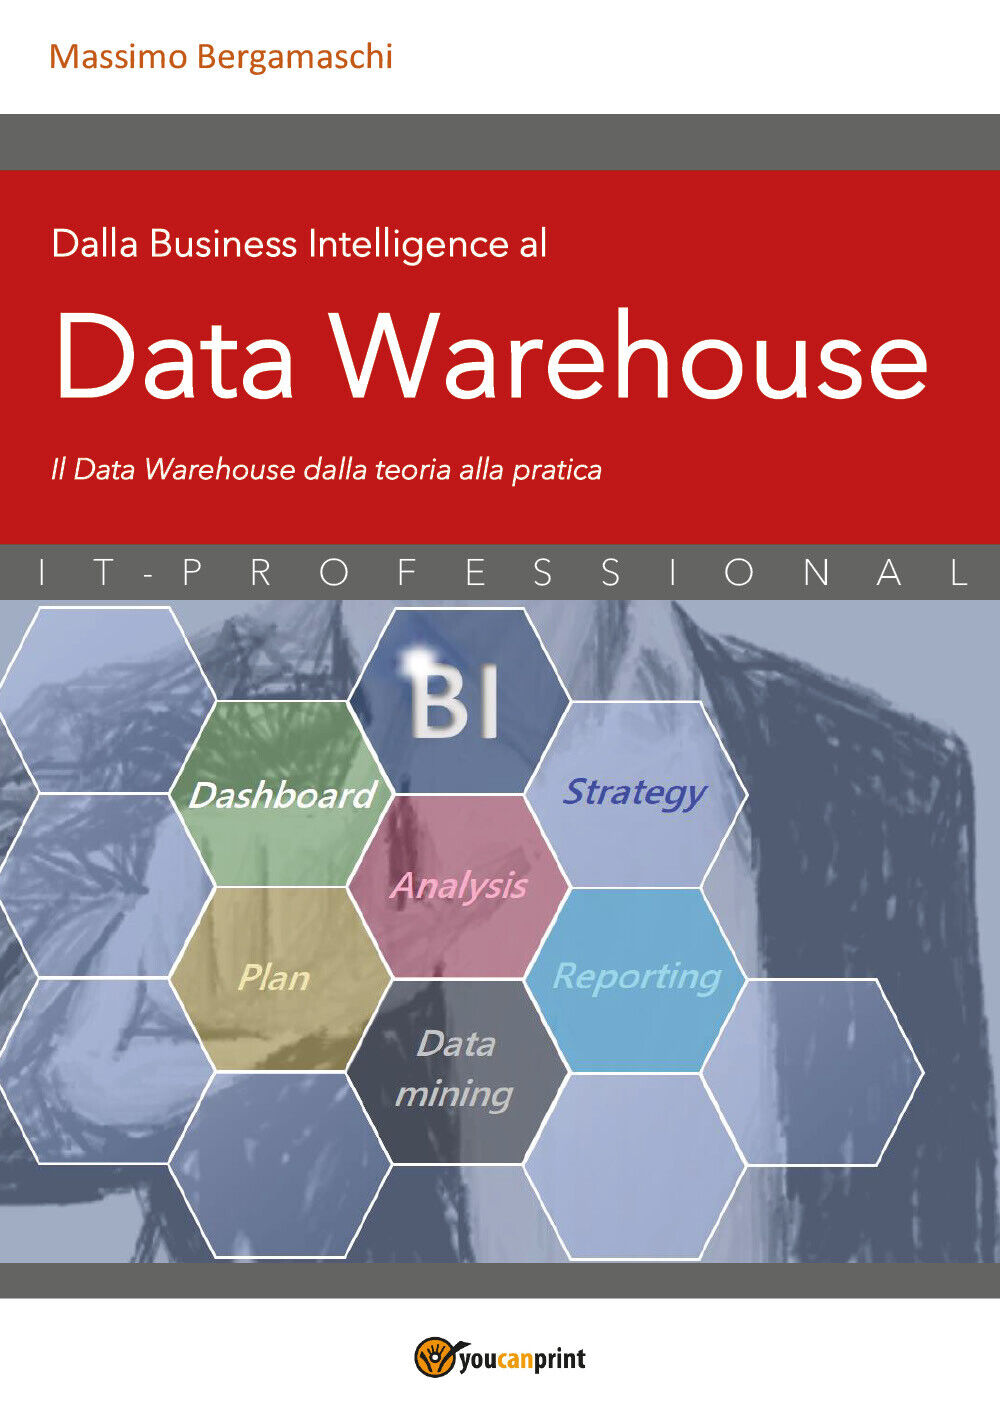 Dalla Business Intelligence al Data Warehouse di Massimo Bergamaschi,  2021,  Yo